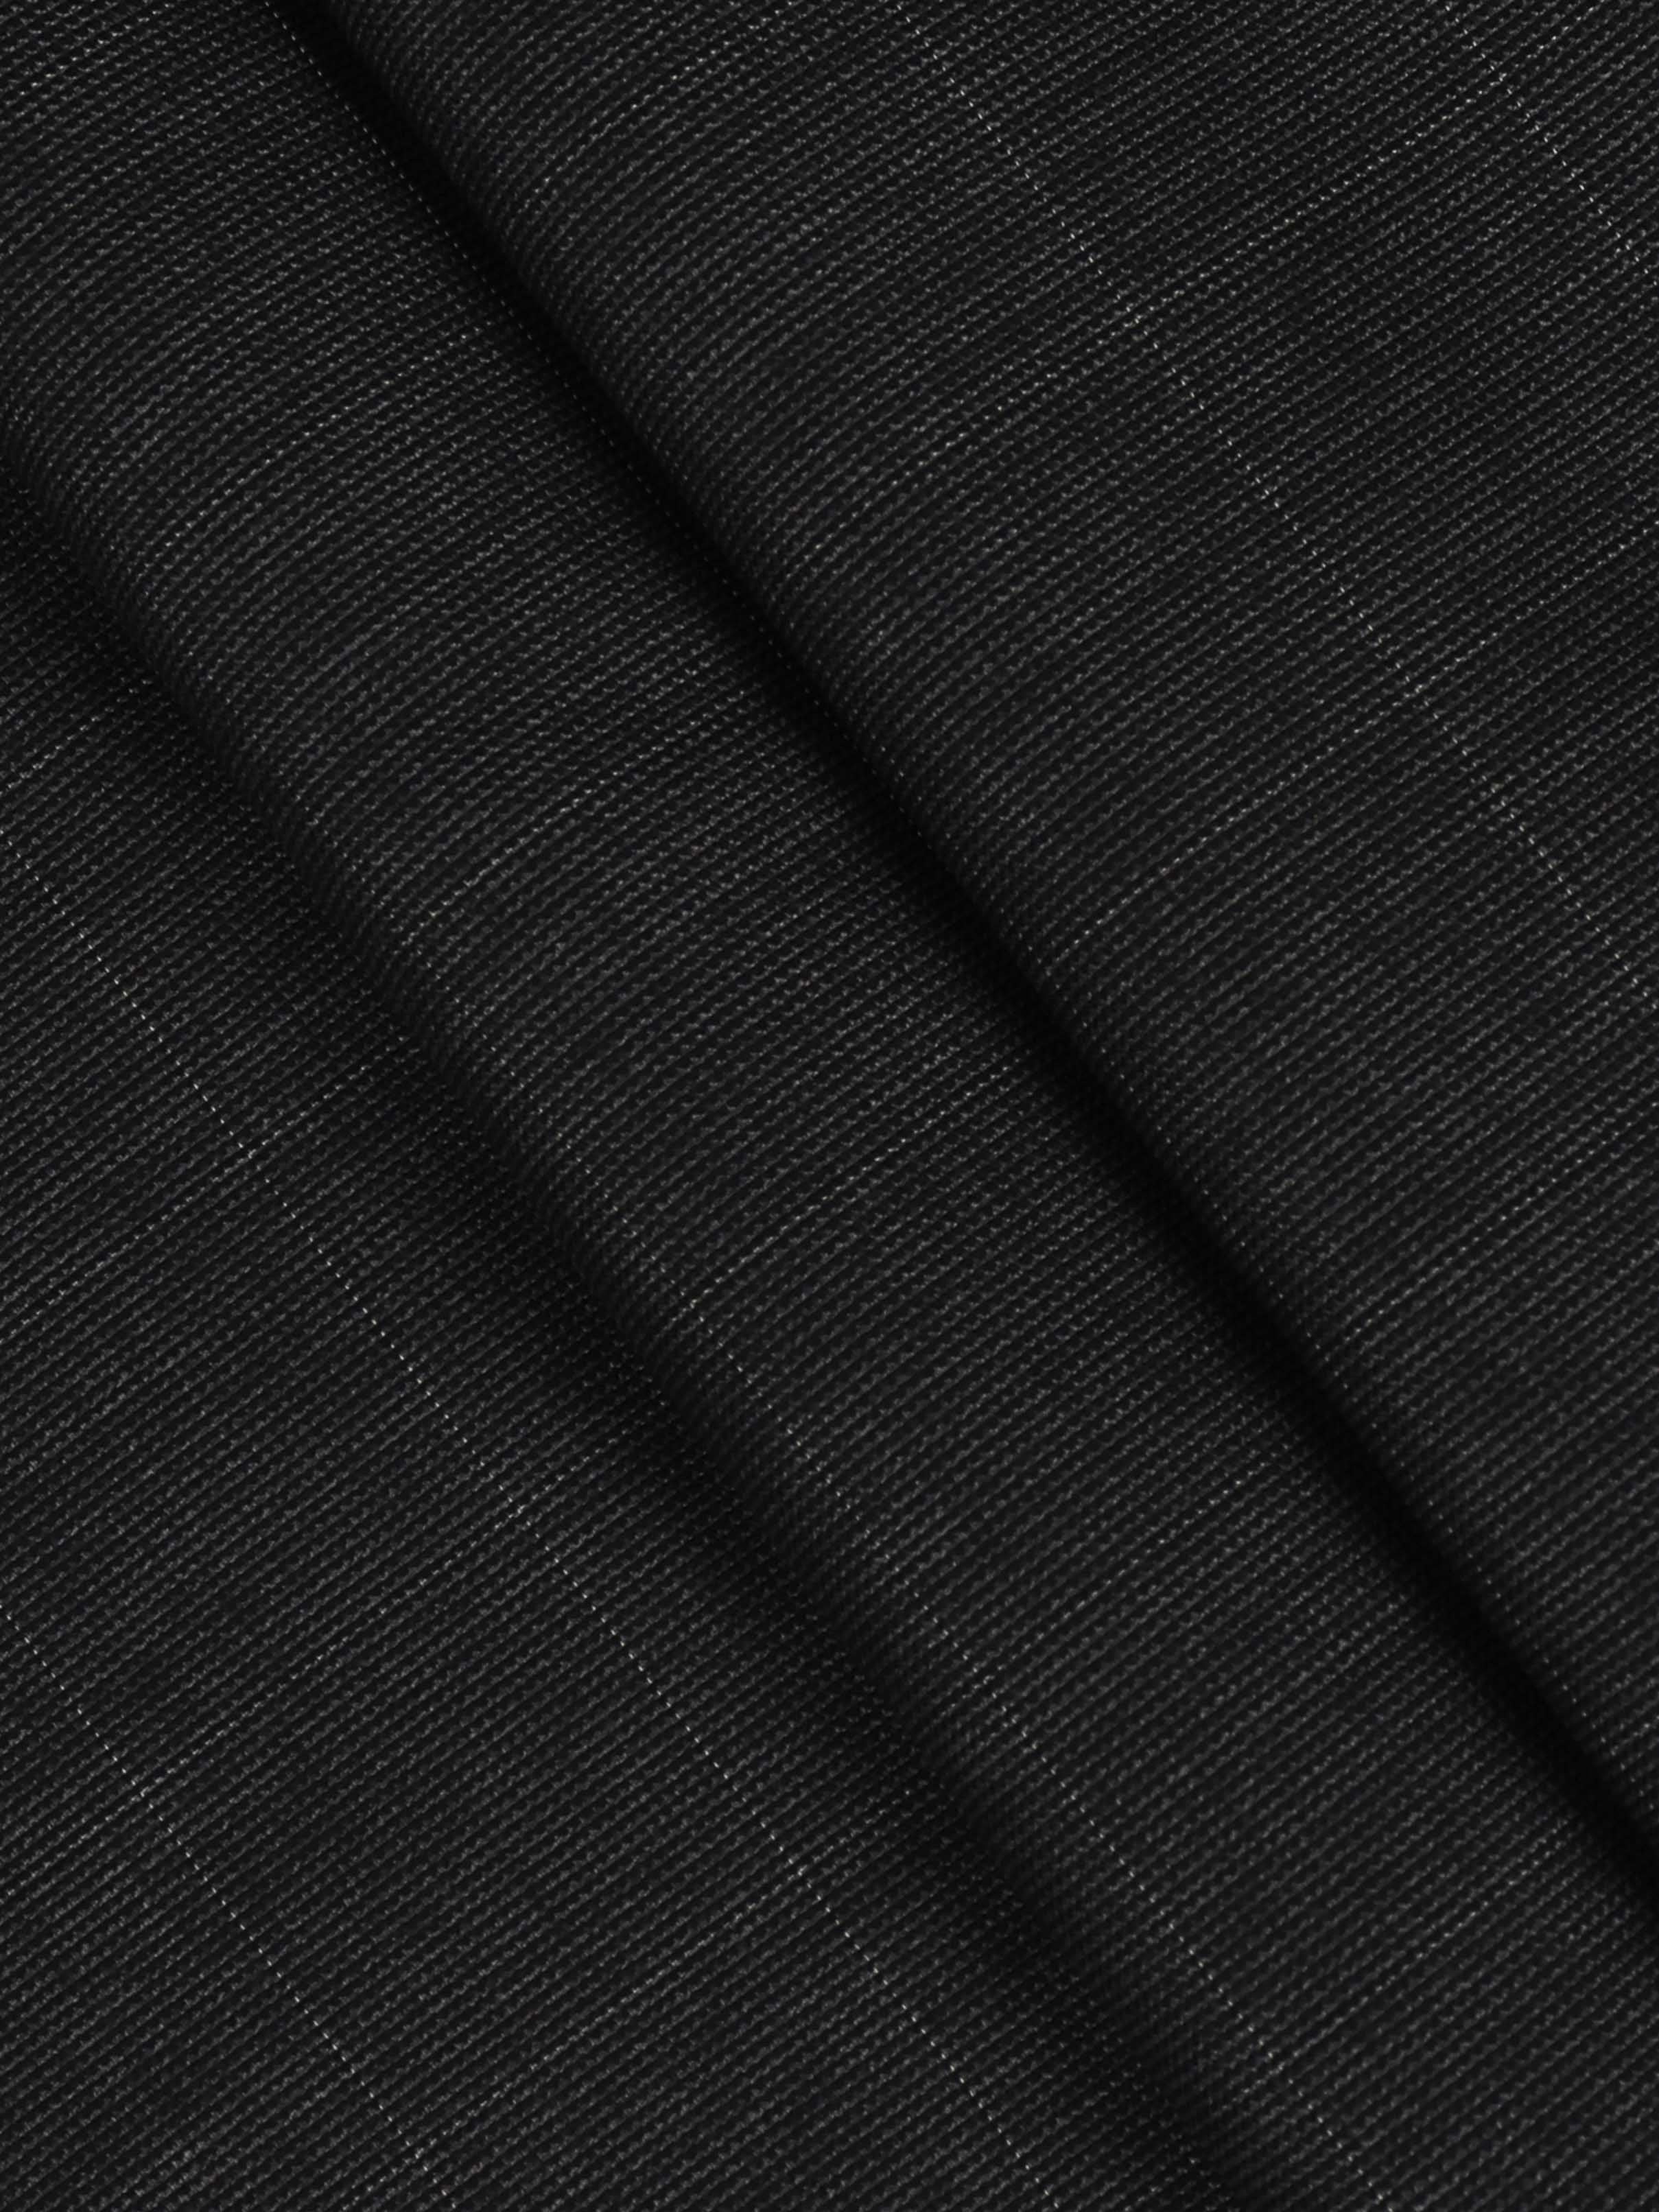 Premium Australian Merino Wool Blended Checked Pants Fabric Grey Mark Wool-Pattern view